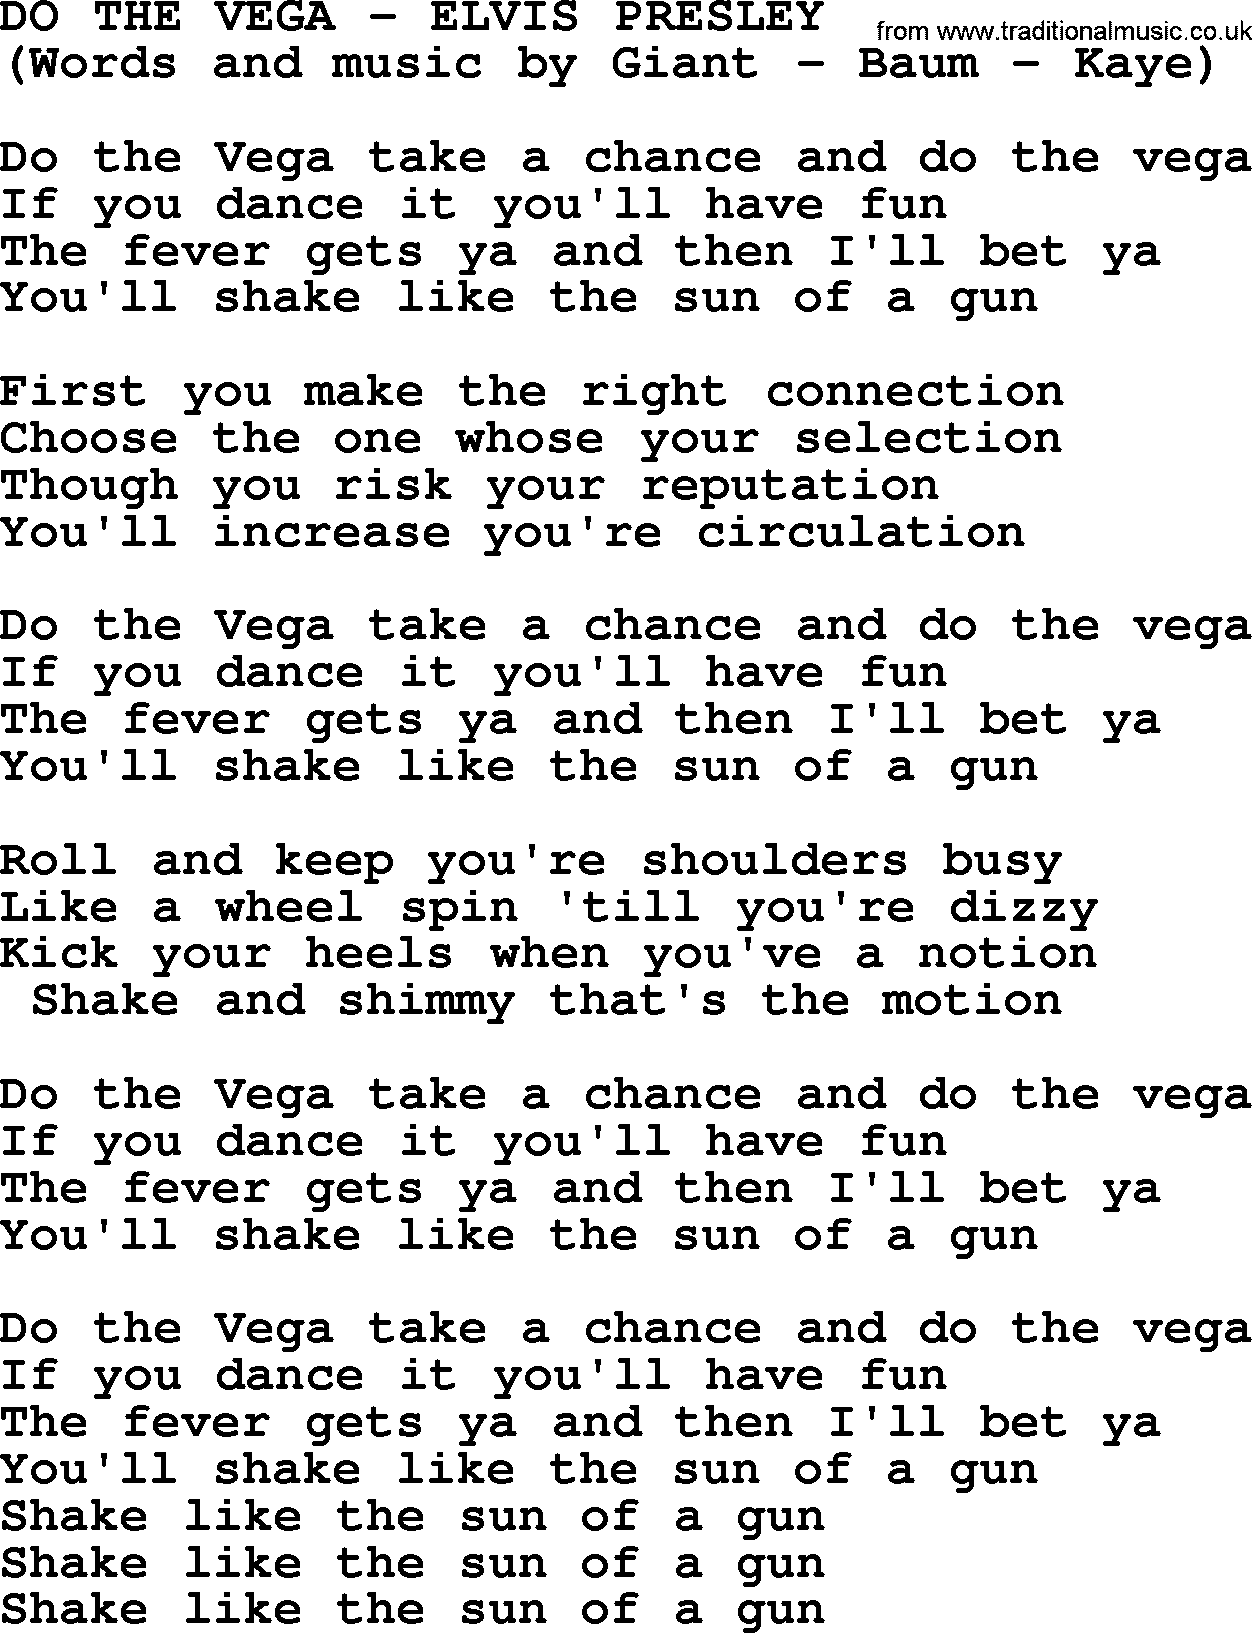 Elvis Presley song: Do The Vega lyrics